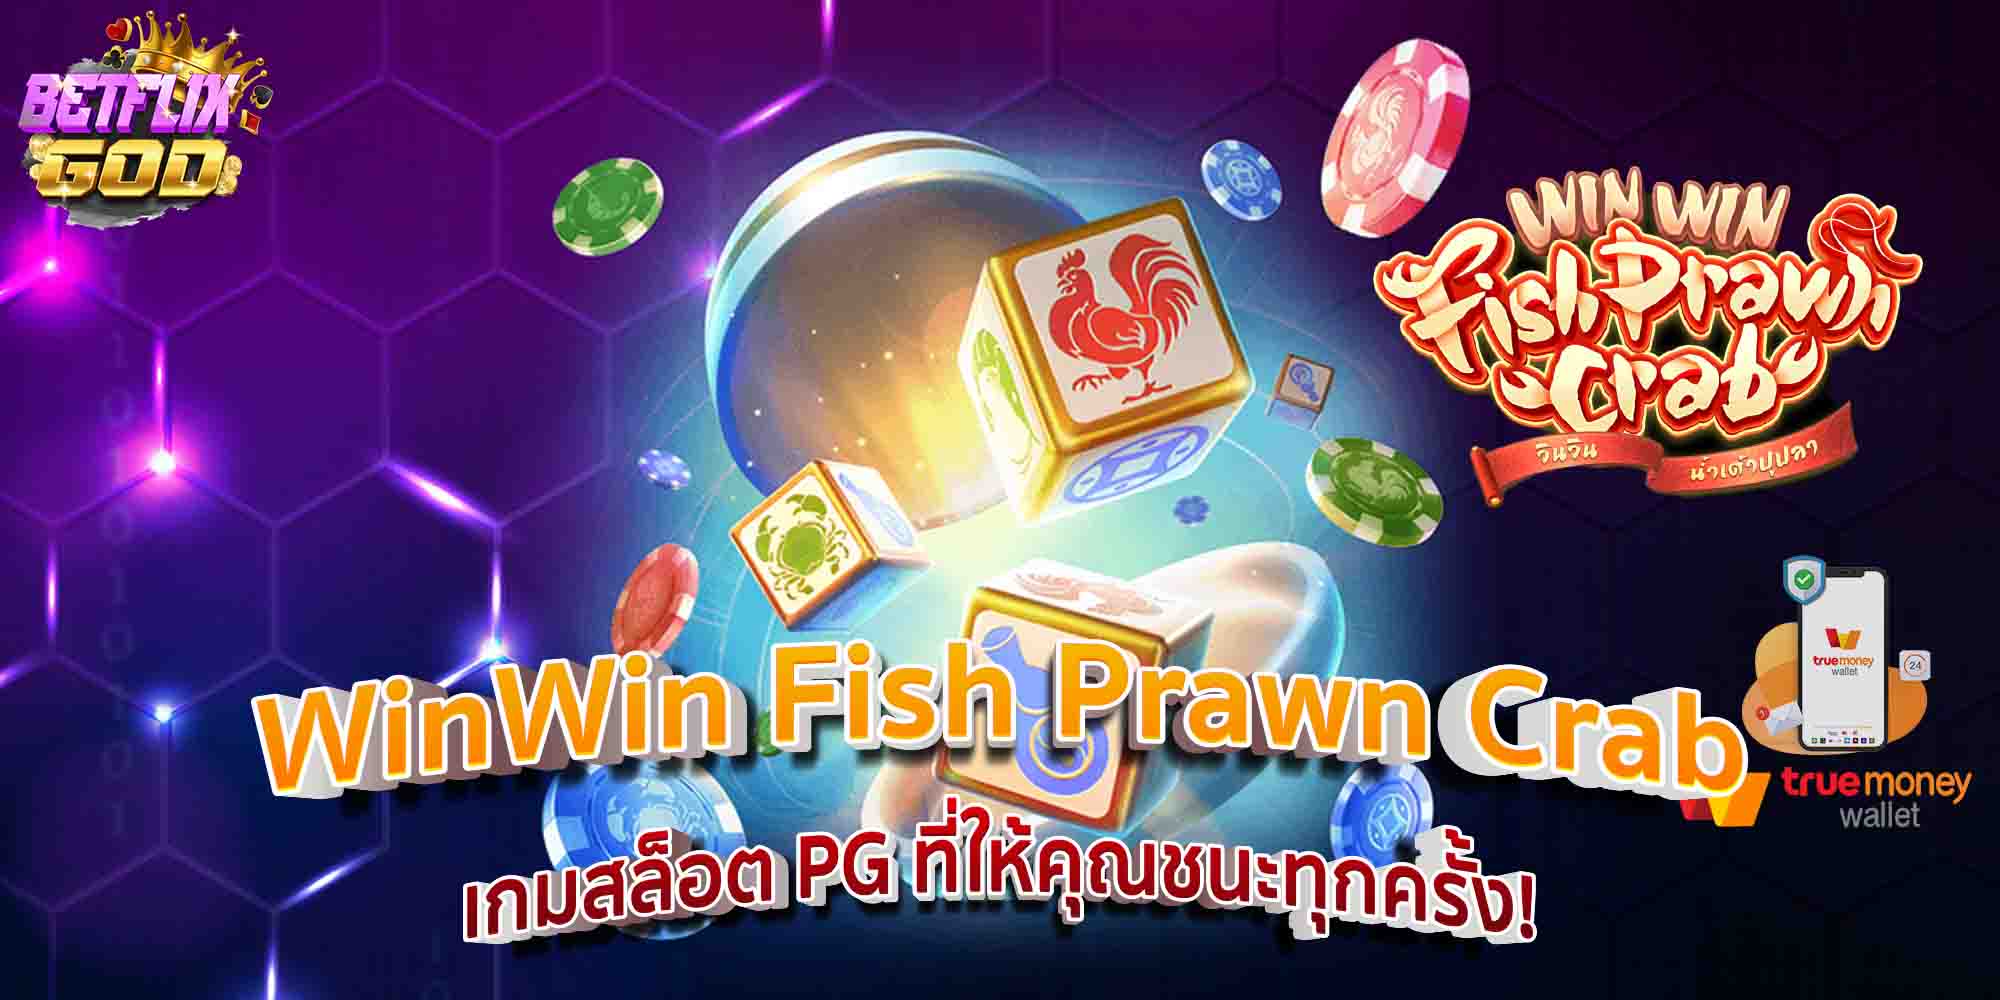 WinWin Fish Prawn Crab เกมสล็อต PG ที่ให้คุณชนะทุกครั้ง!